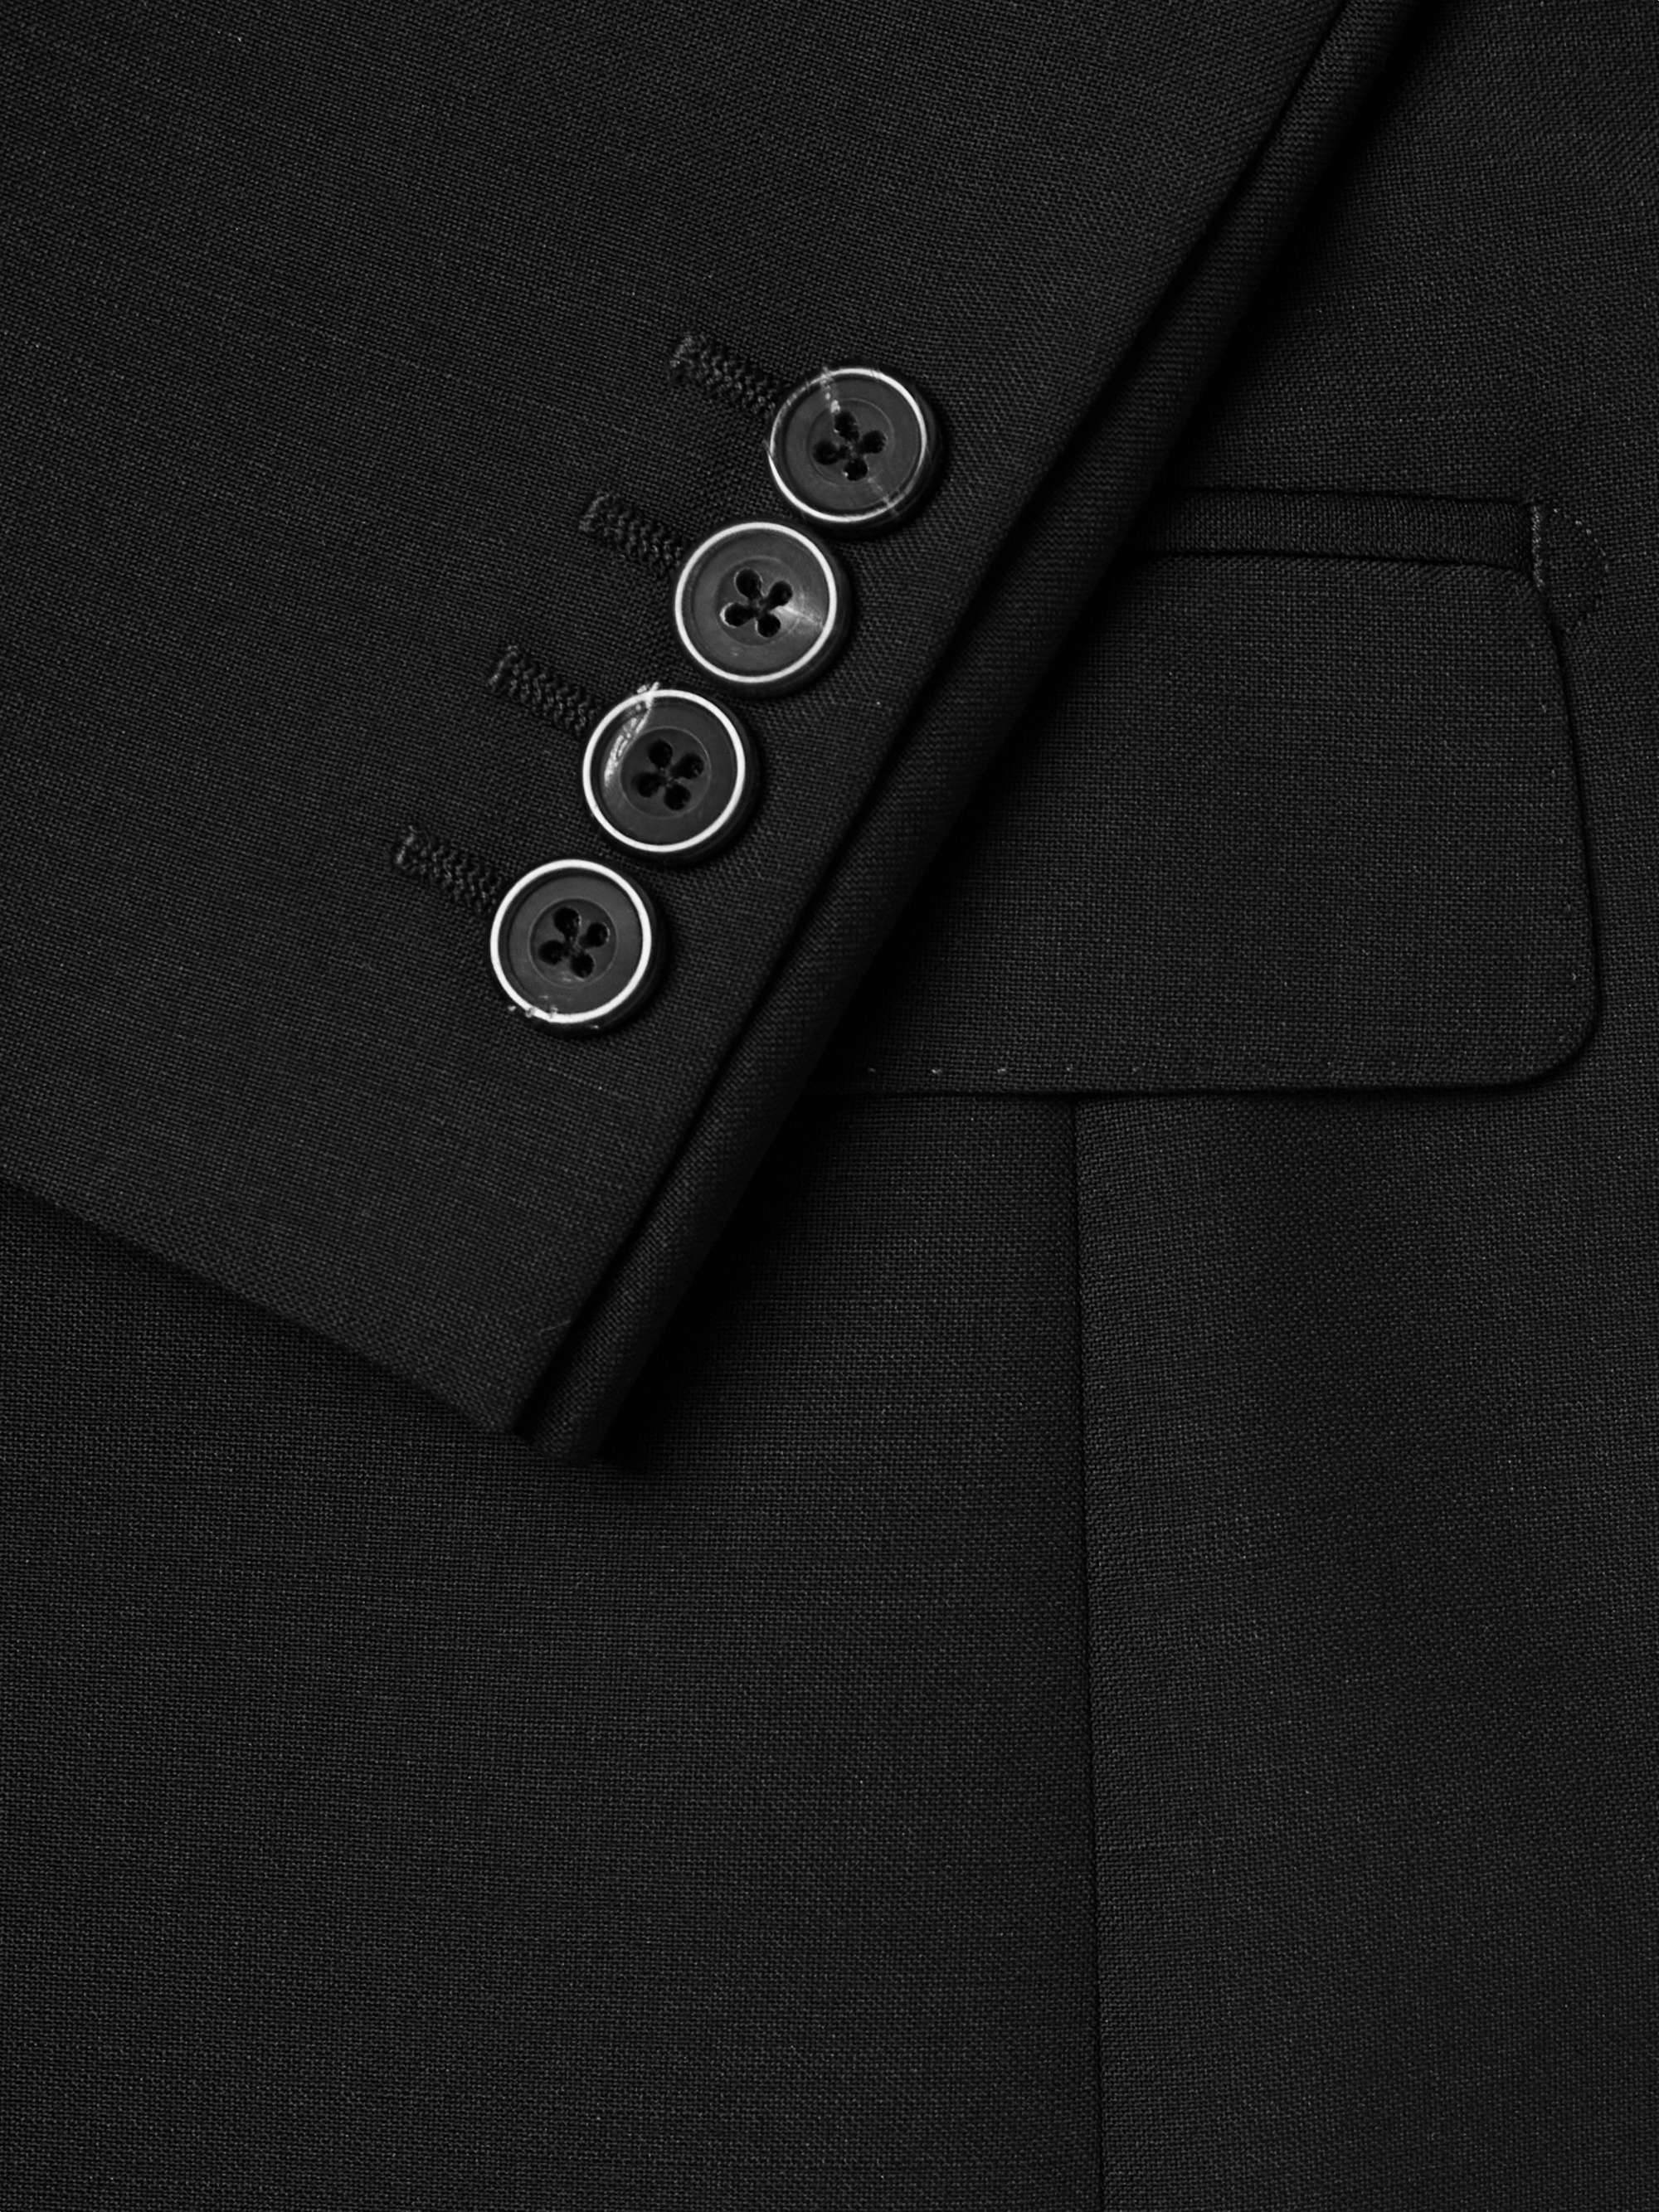 ALEXANDER MCQUEEN Wool and Mohair-Blend Suit Jacket for Men | MR PORTER